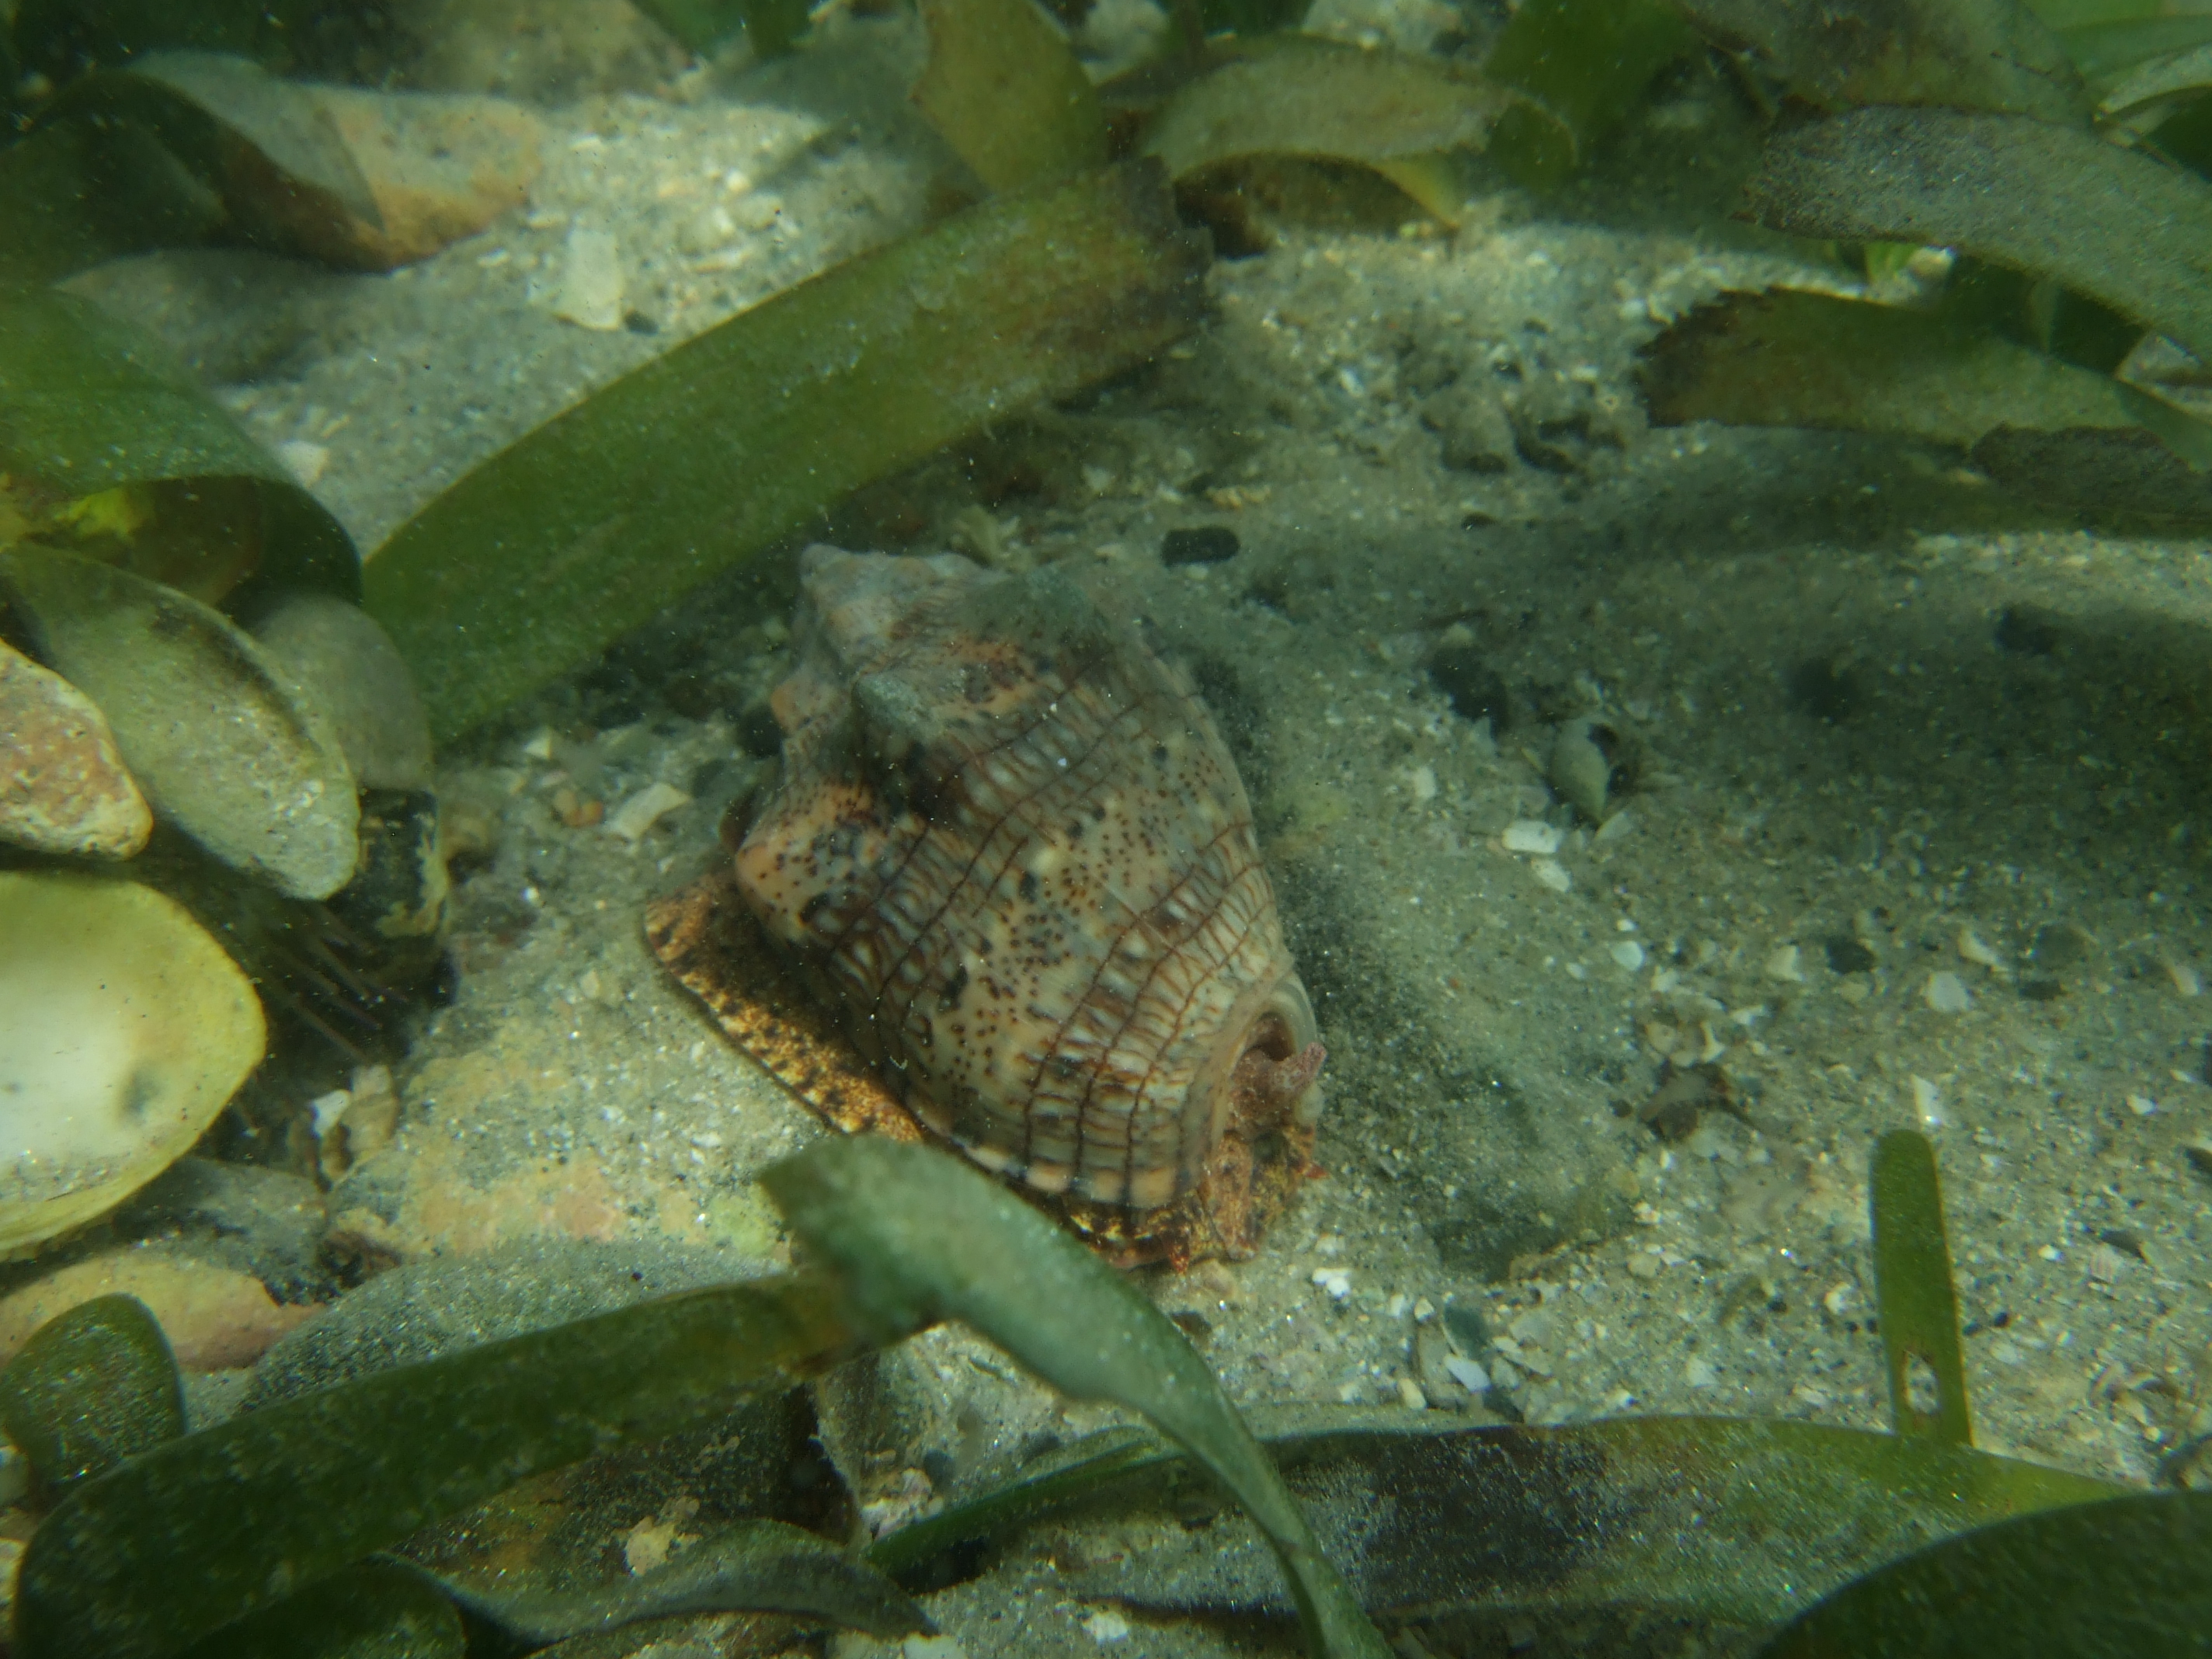 The Caribbean snail Voluta musica, that influenced Peralta Brichtova’s interest in seagrass ecosystems. 